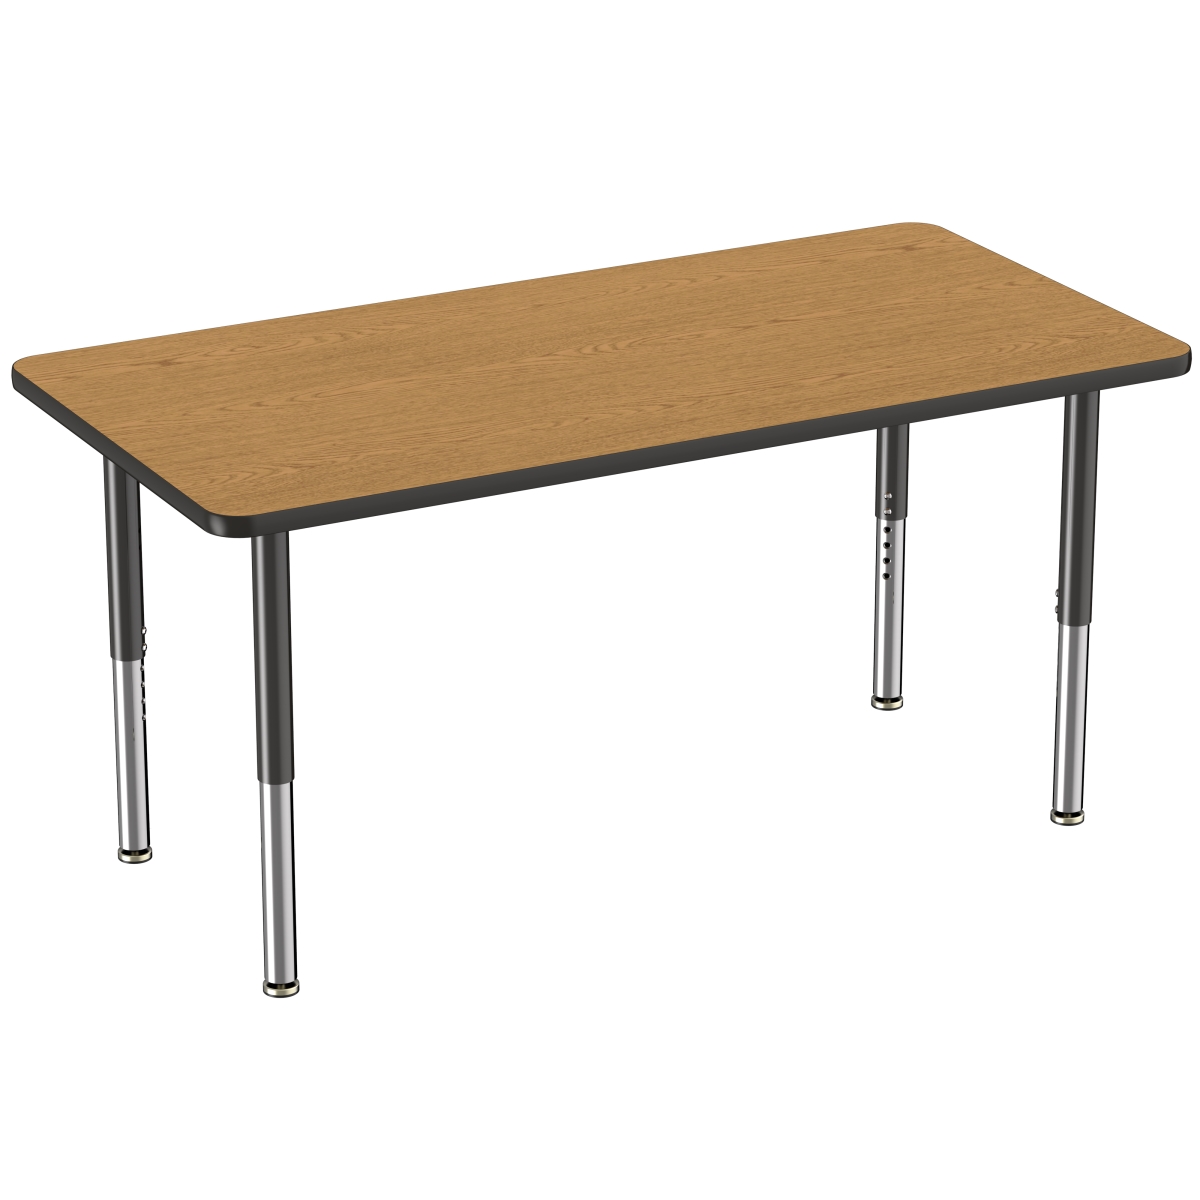 10026-okbk 30 X 60 In. Rectangle T-mold Adjustable Activity Table With Super Leg - Oak & Black